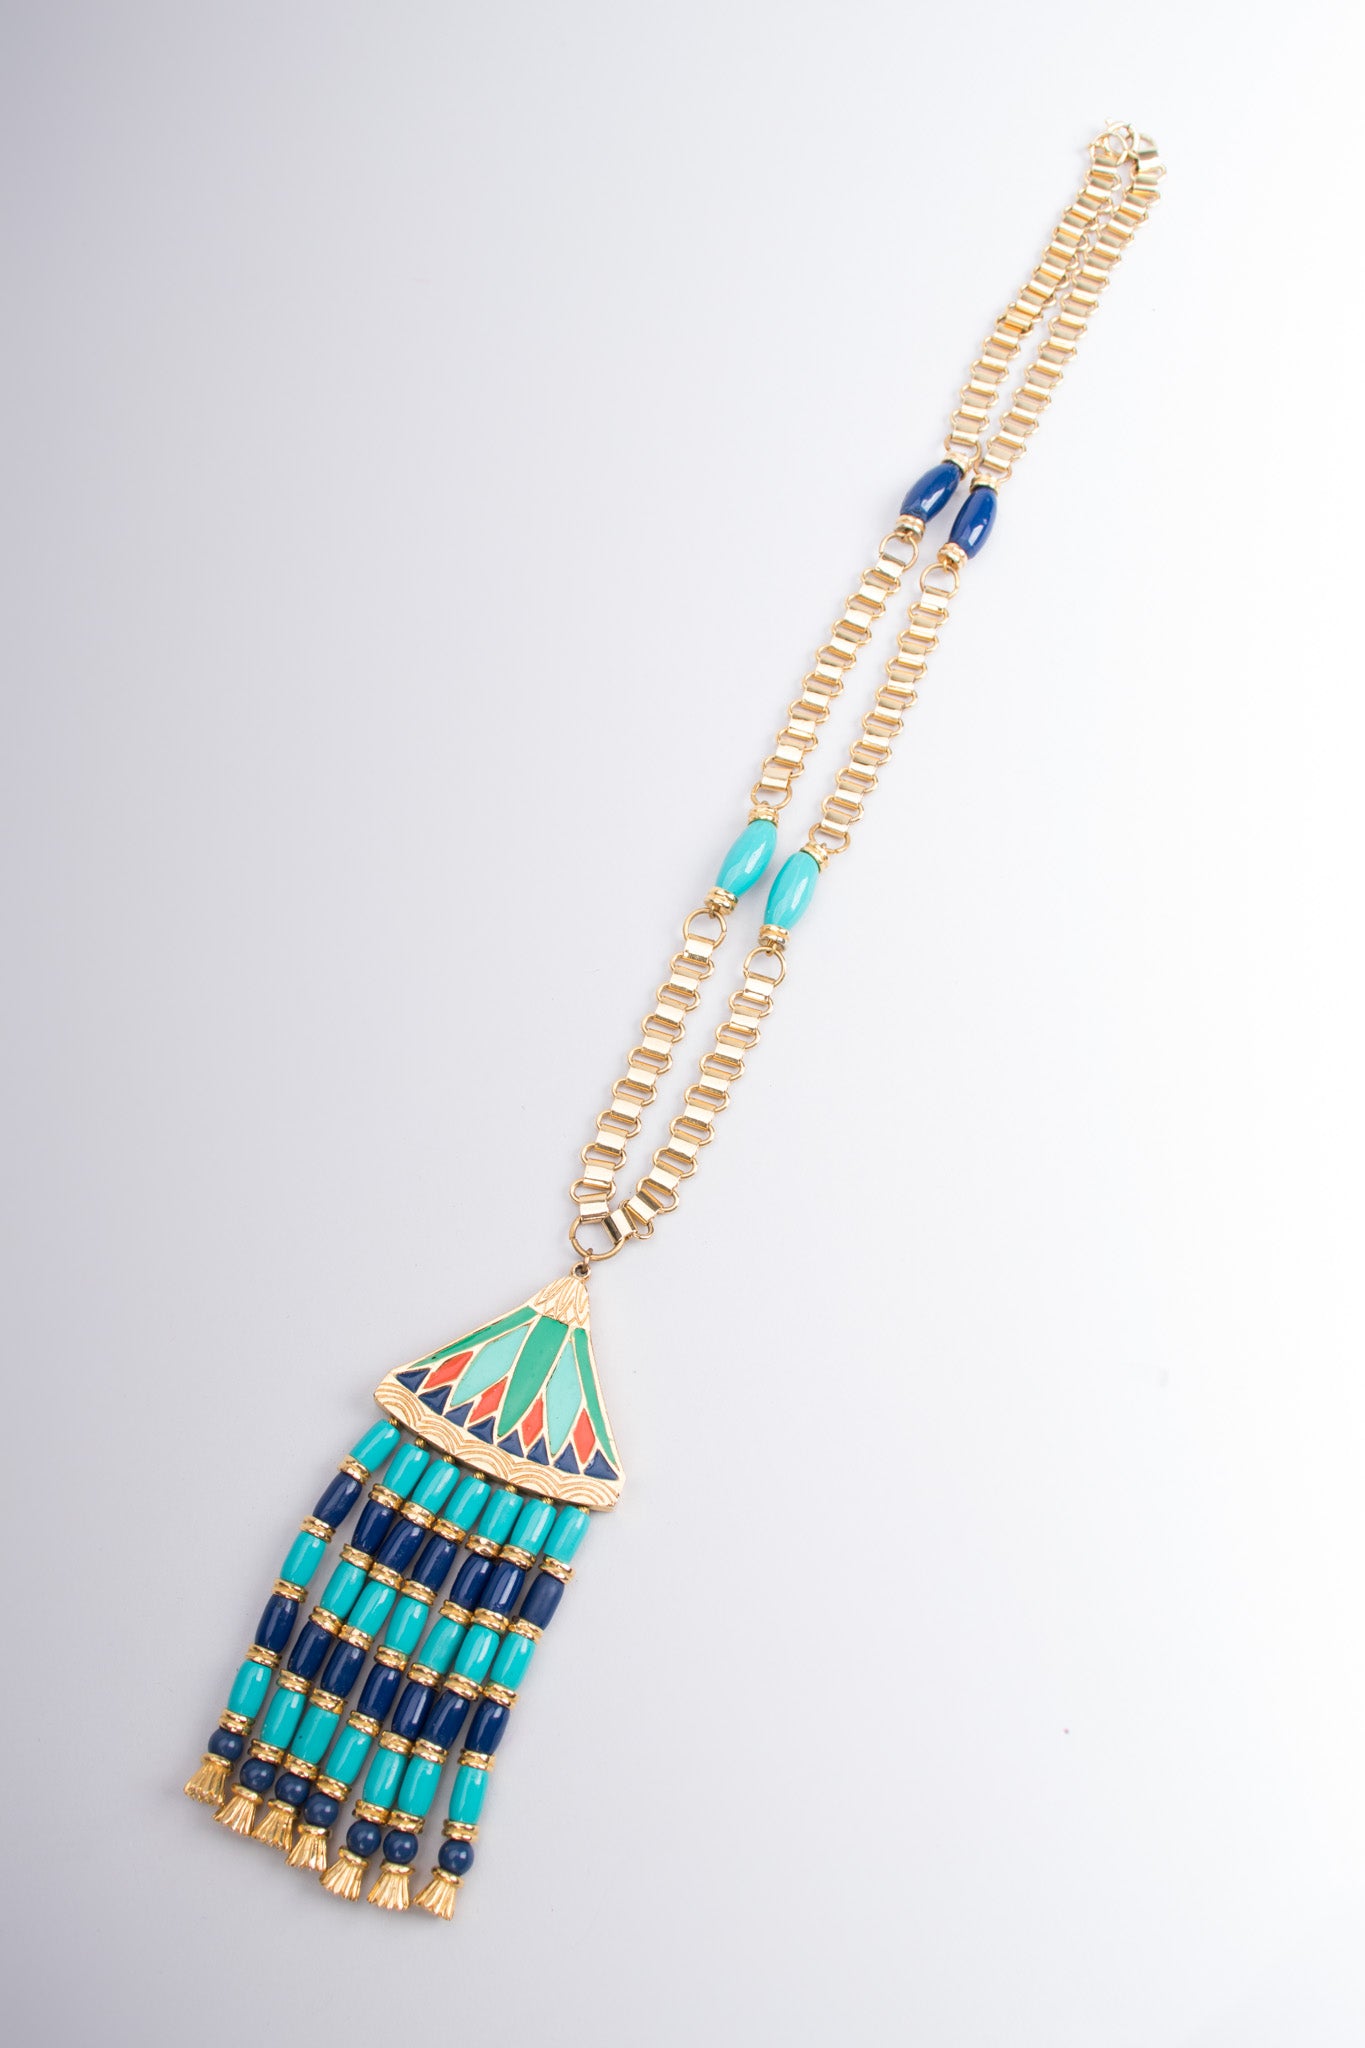 Hattie Carnegie Egyptian Bead Fringe Pendant Necklace